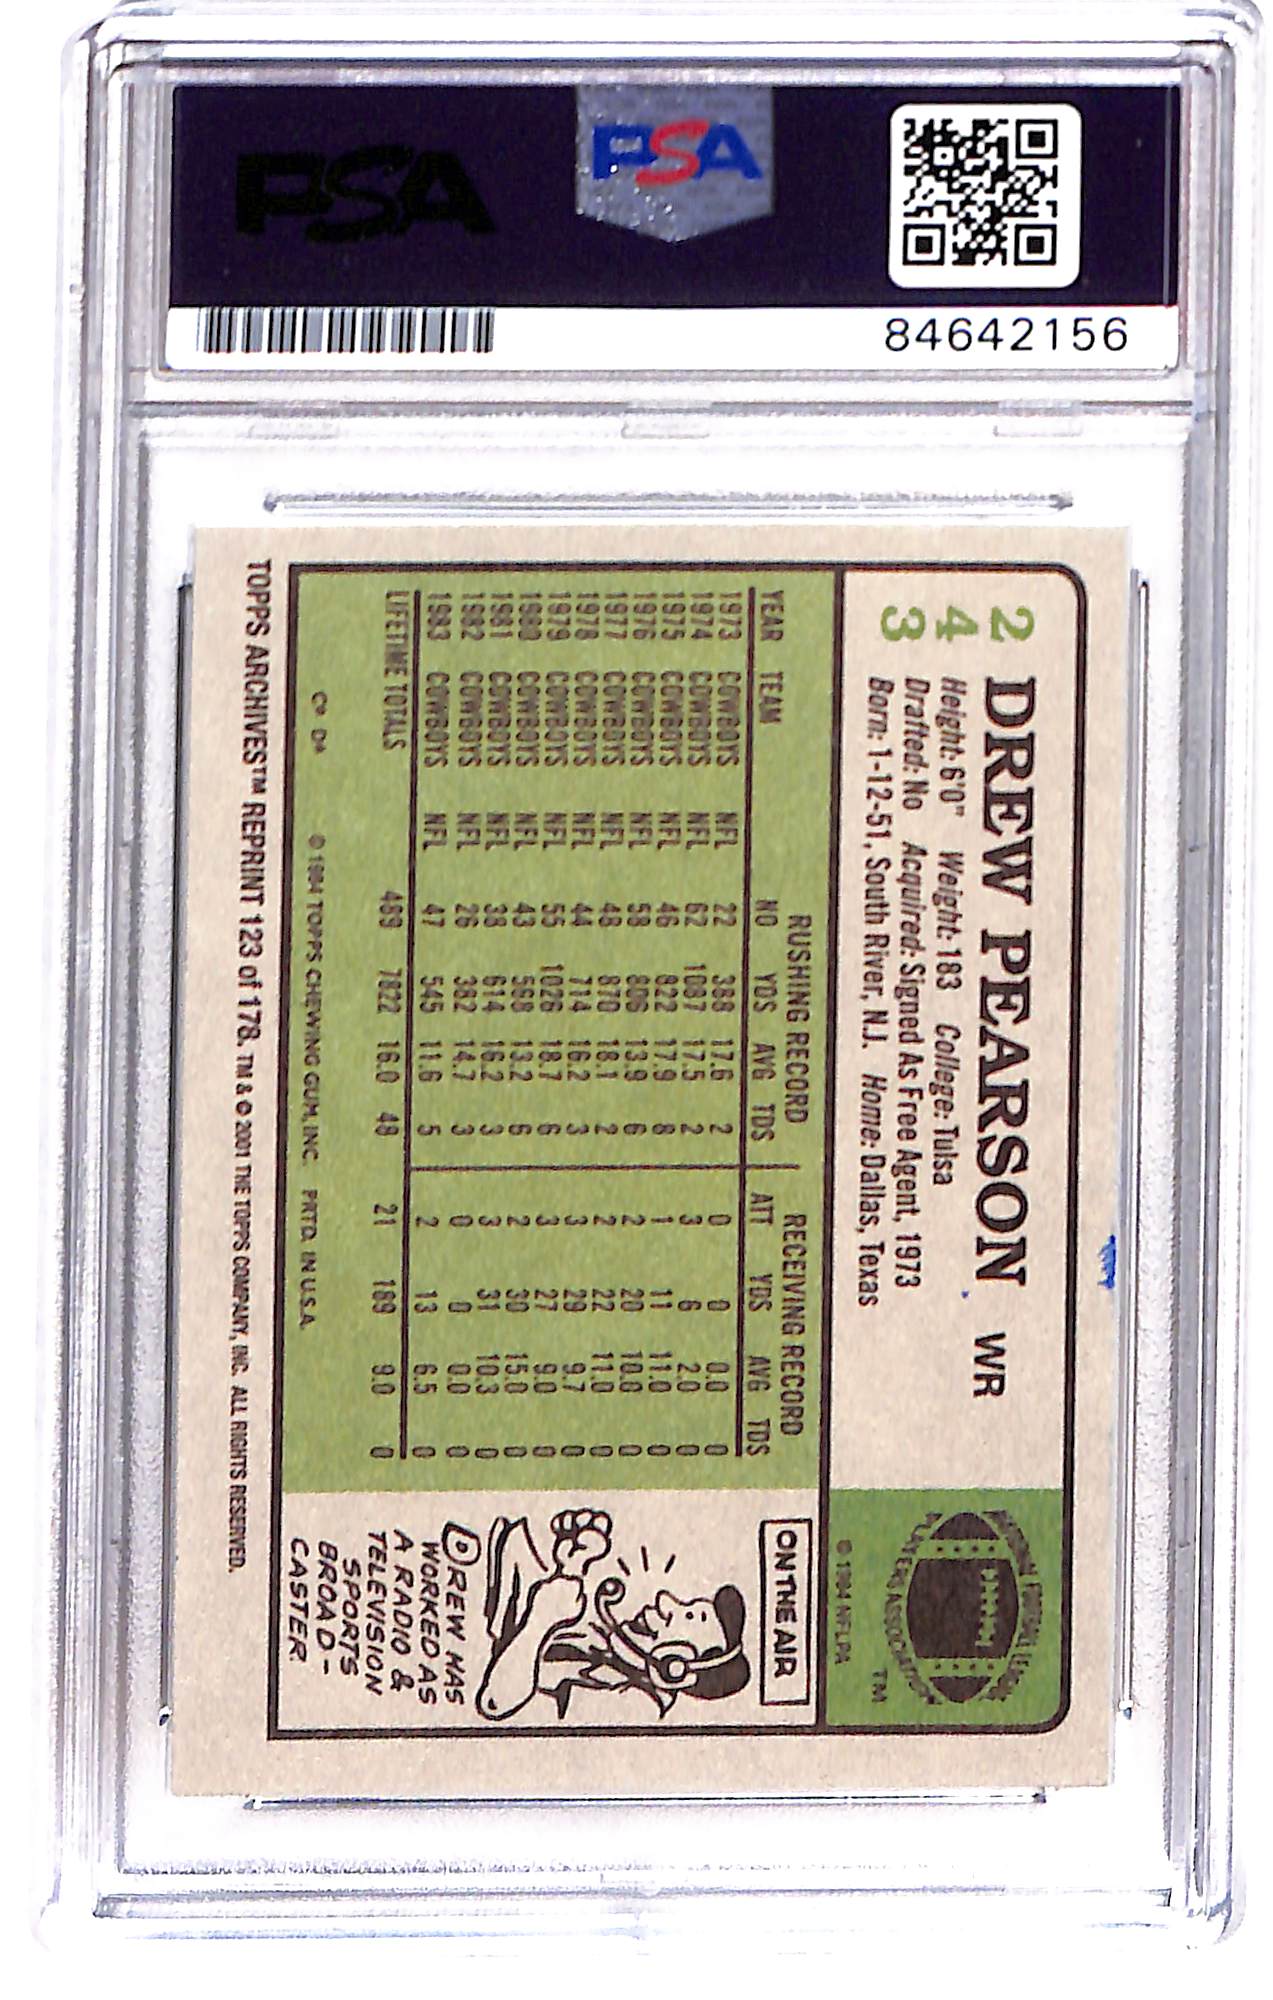 1984 TOPPS DREW PEARSON AUTO CARD WITH HOF 21 INSCRIPTION PSA DNA (2156)